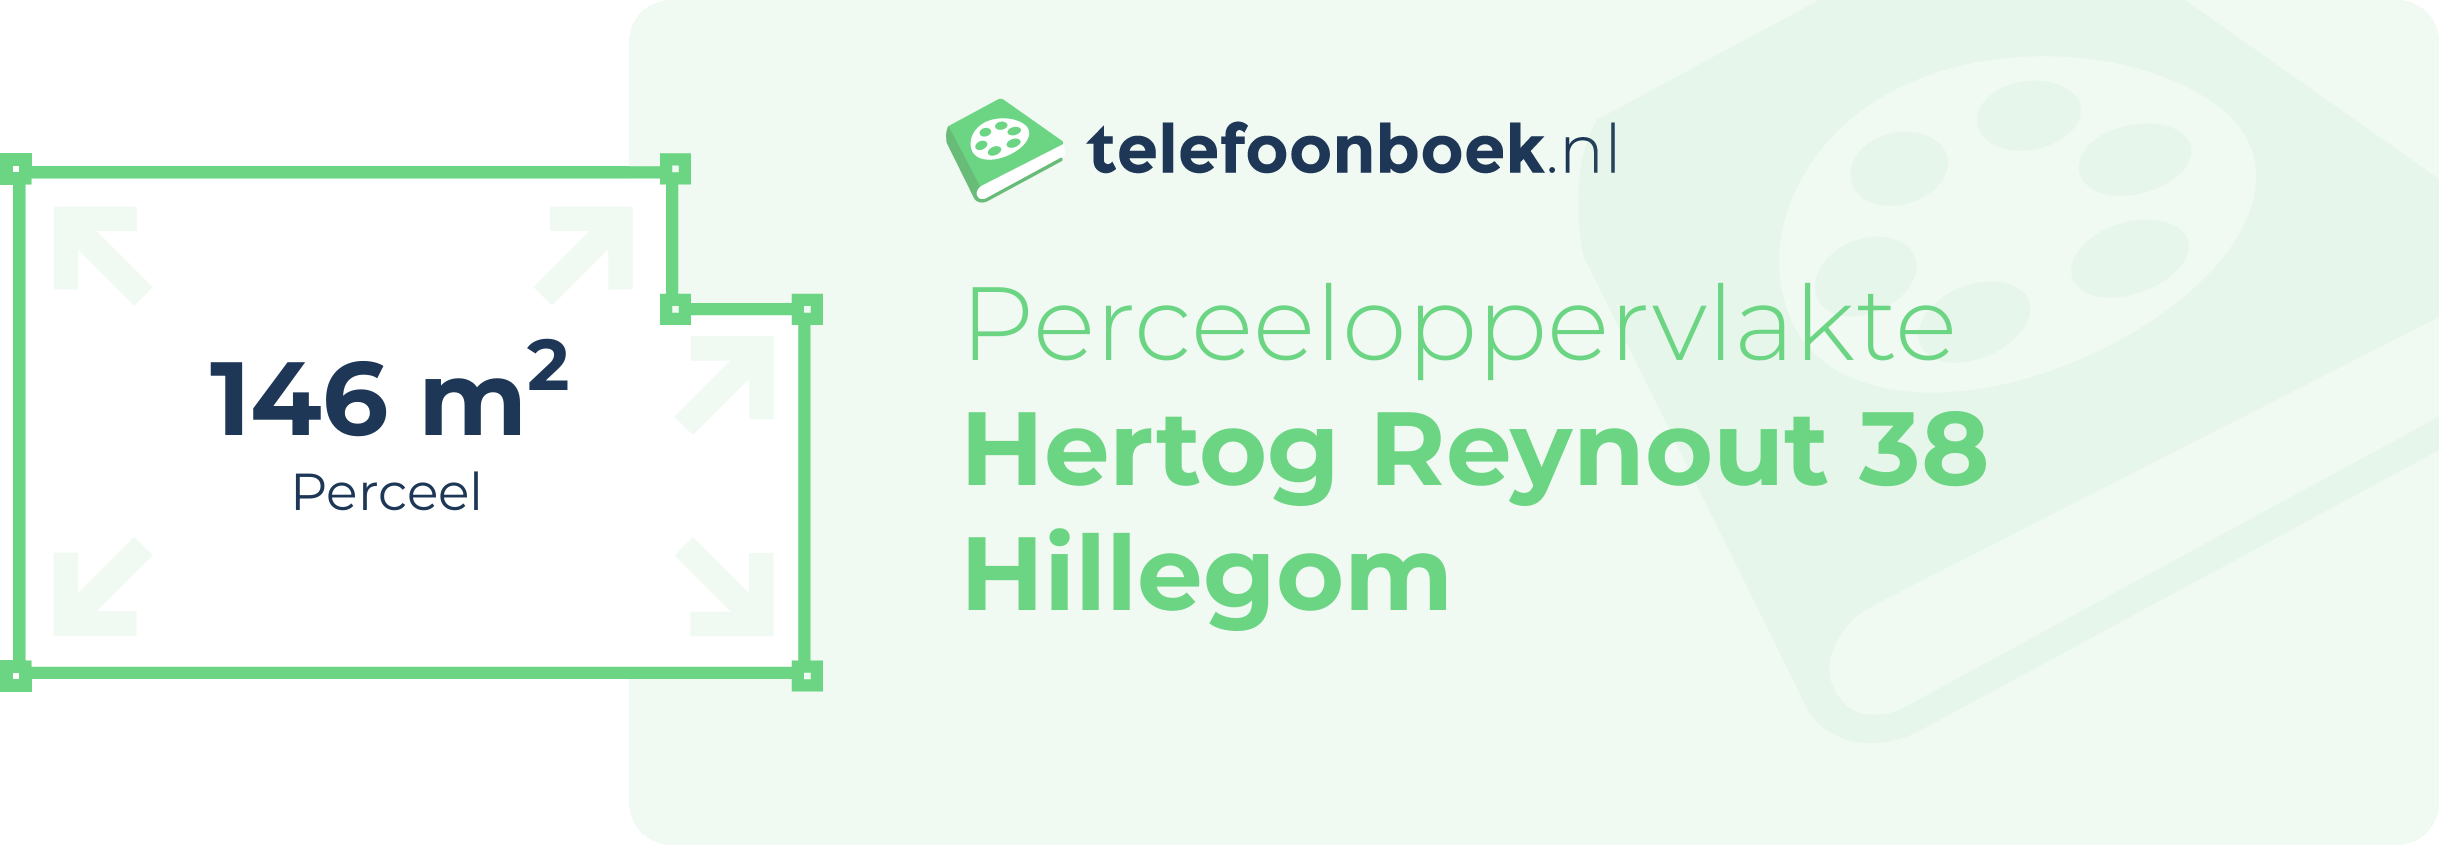 Perceeloppervlakte Hertog Reynout 38 Hillegom